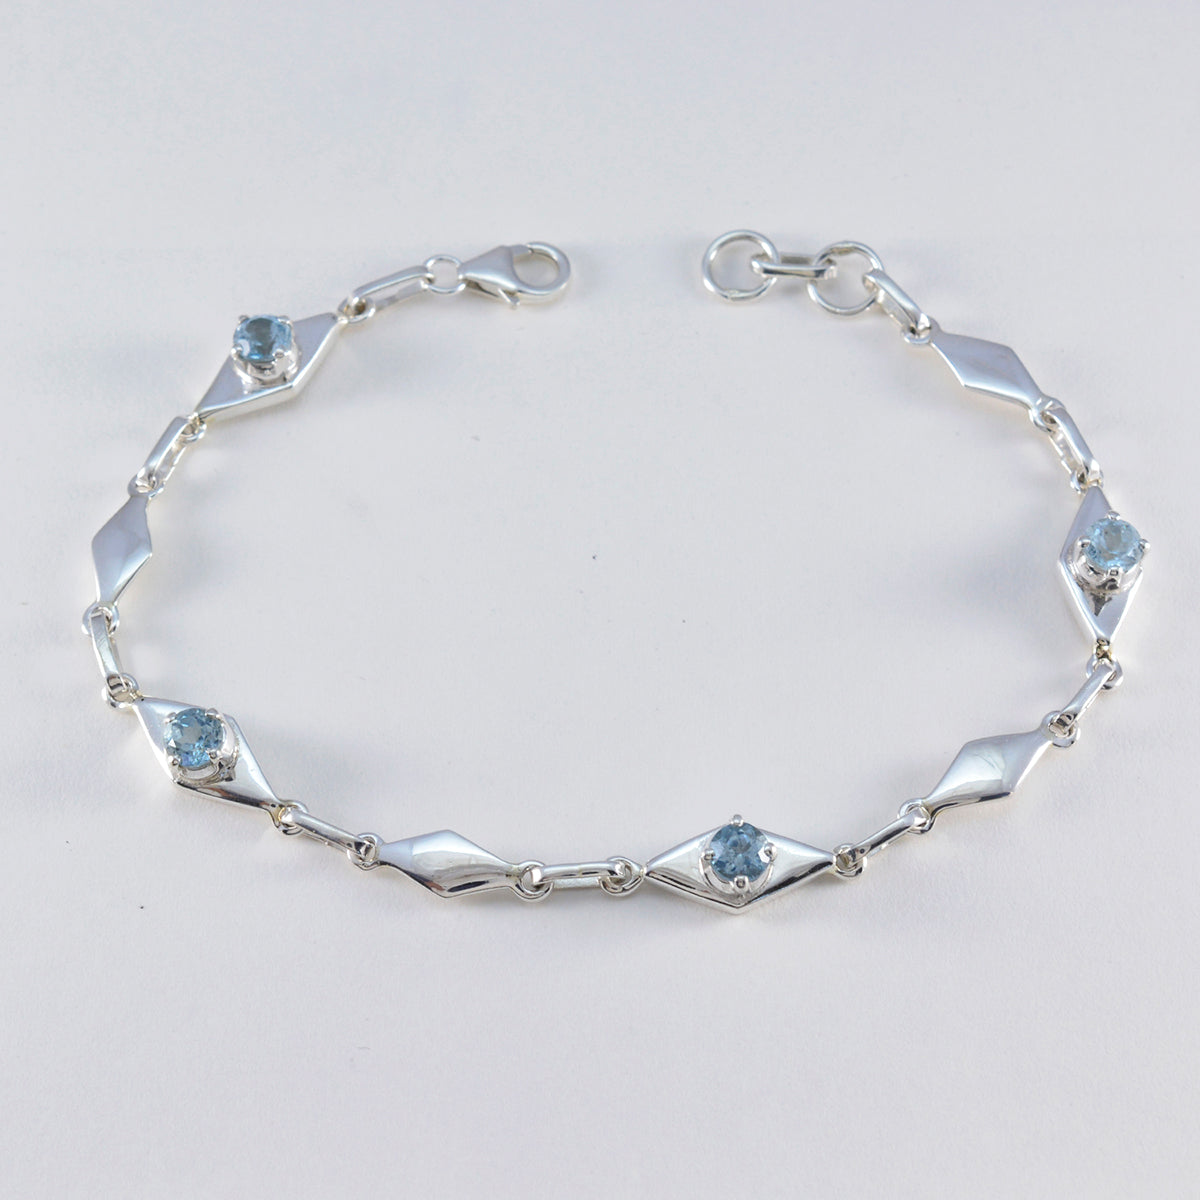 Riyo Jewelry 925 Sterling Silver Bracelet For Womens Blue Topaz Bracelet Prong Setting Bracelet with Fish Hook Link Bracelet L Size 6-8.5 Inch.